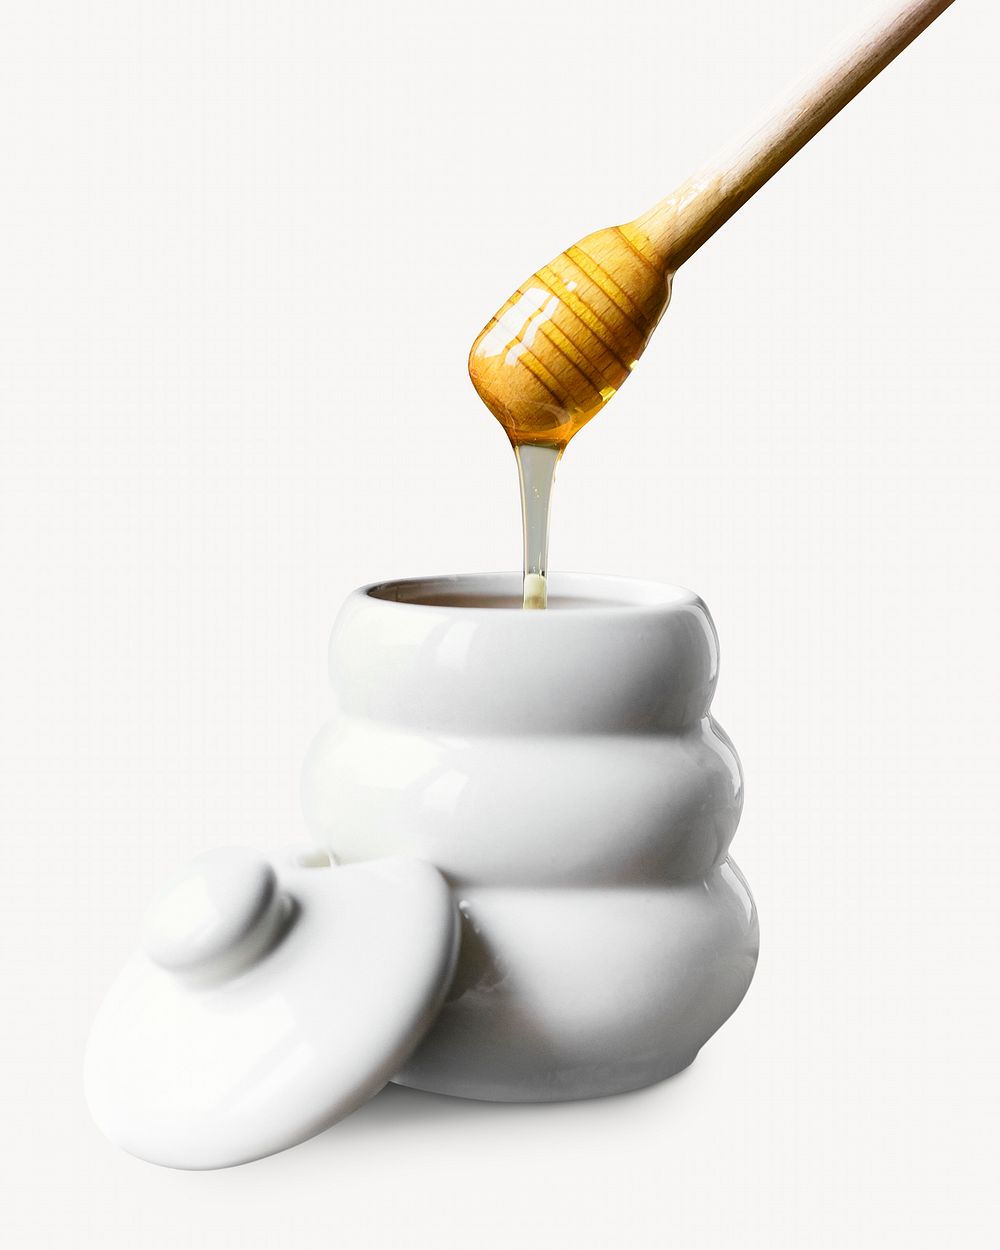 Honey jar, isolated food image